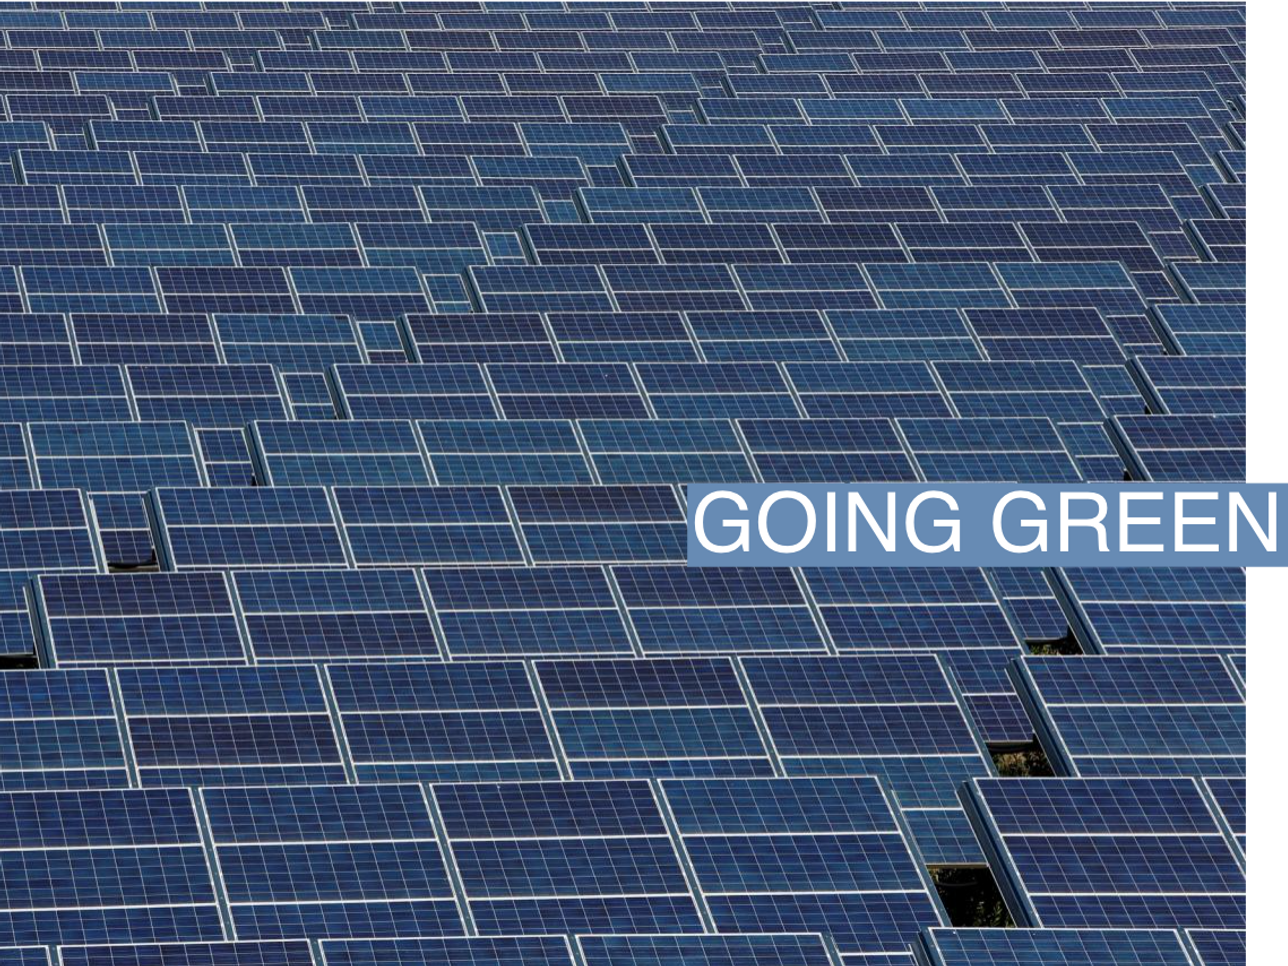 Solar panels to produce renewable energy are seen at the Urbasolar photovoltaic park in Gardanne, France, June 25, 2018. REUTERS/Jean-Paul Pelissier/File Photo